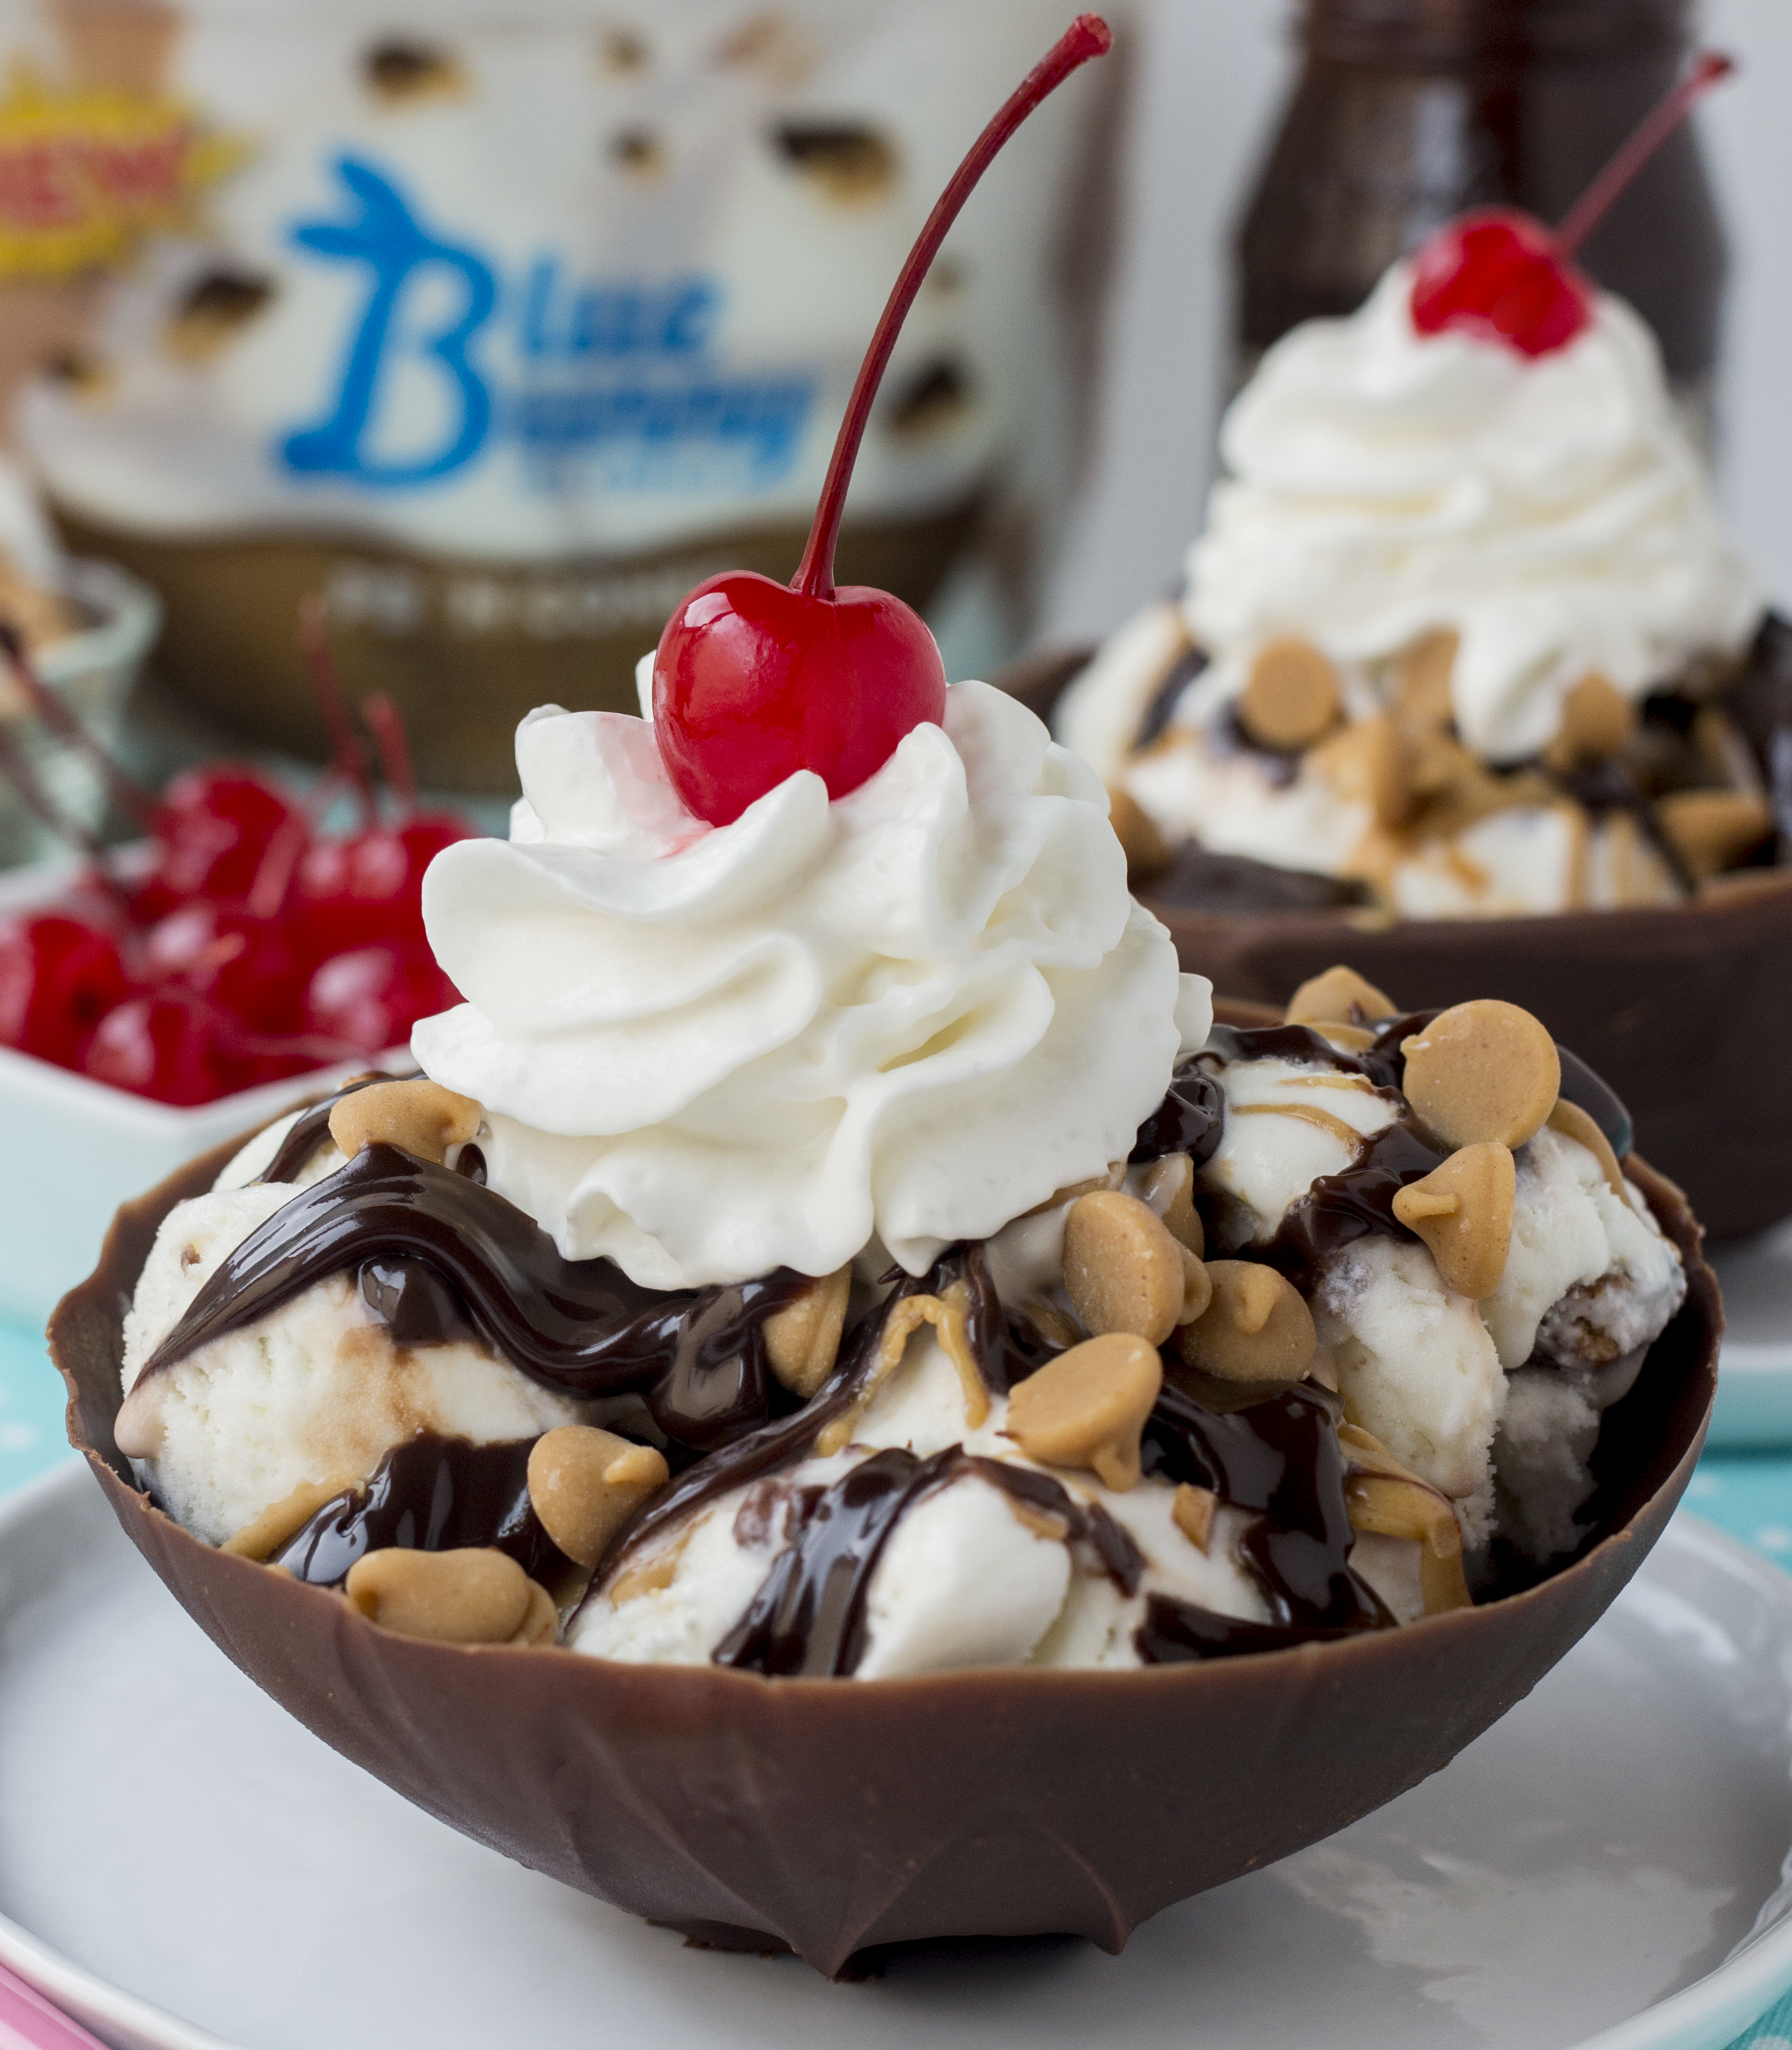 Ice Cream Sundaes In Edible Chocolate Dessert Bowls